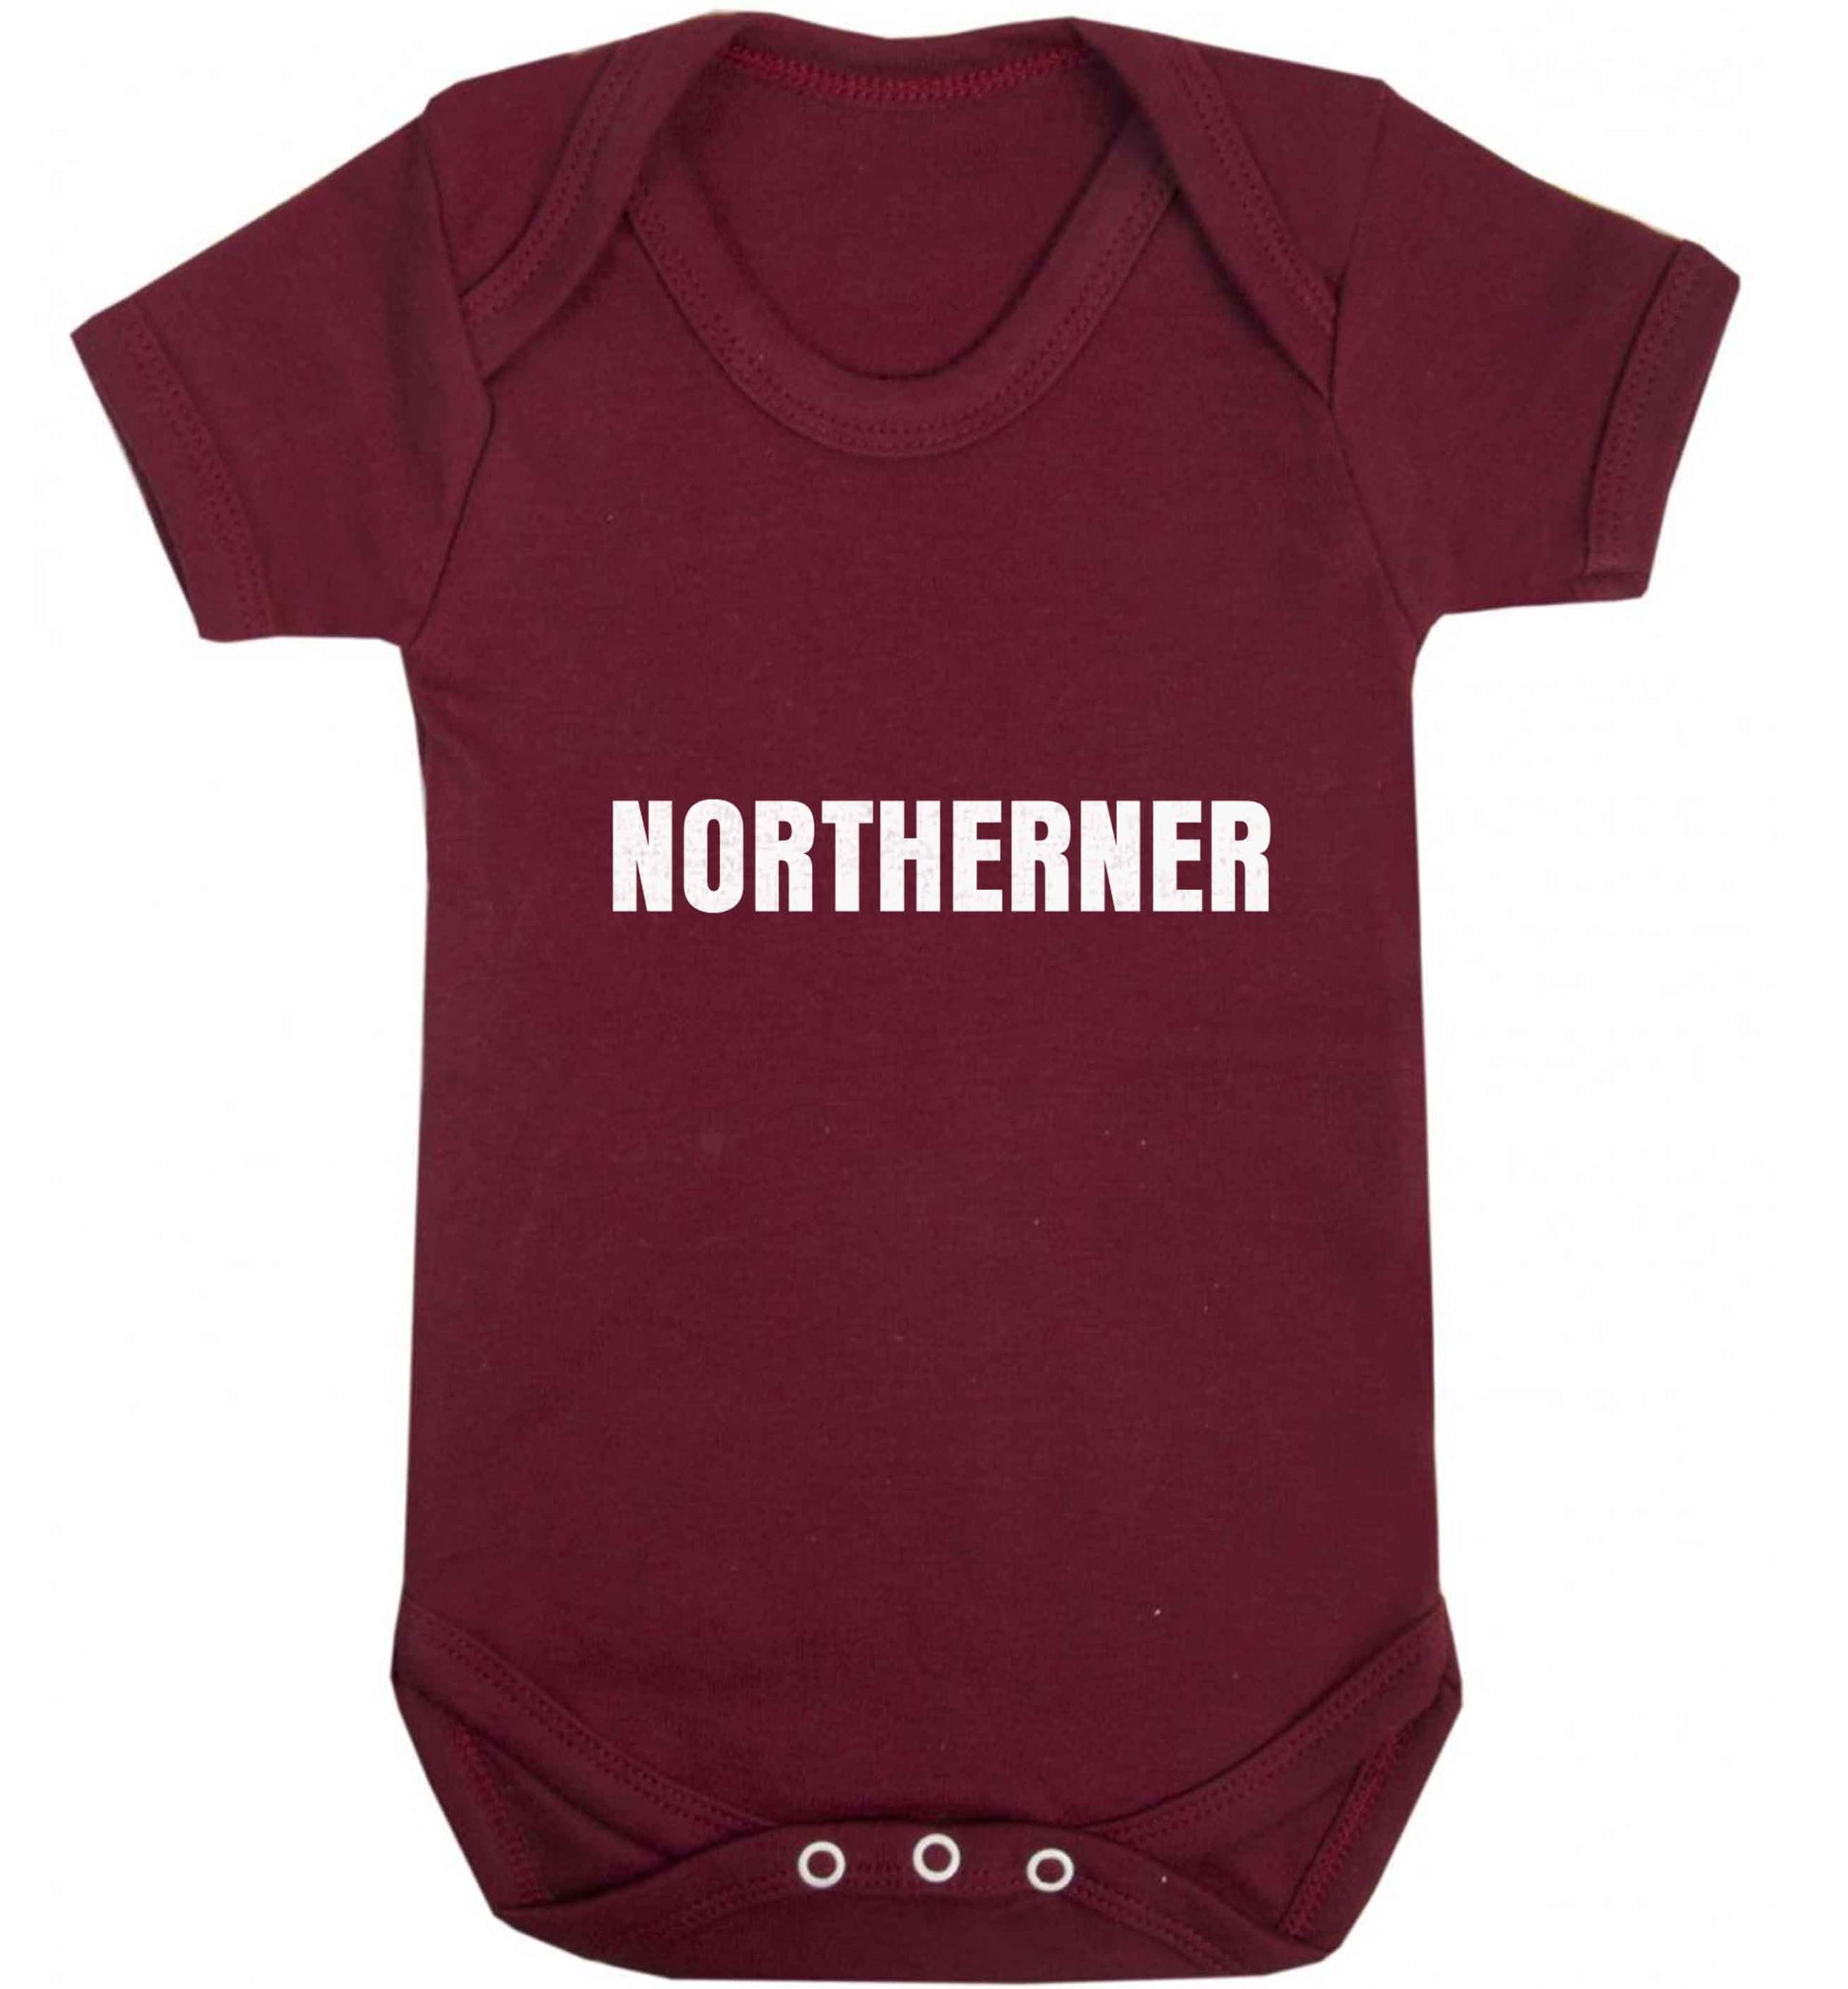 Northerner baby vest maroon 18-24 months